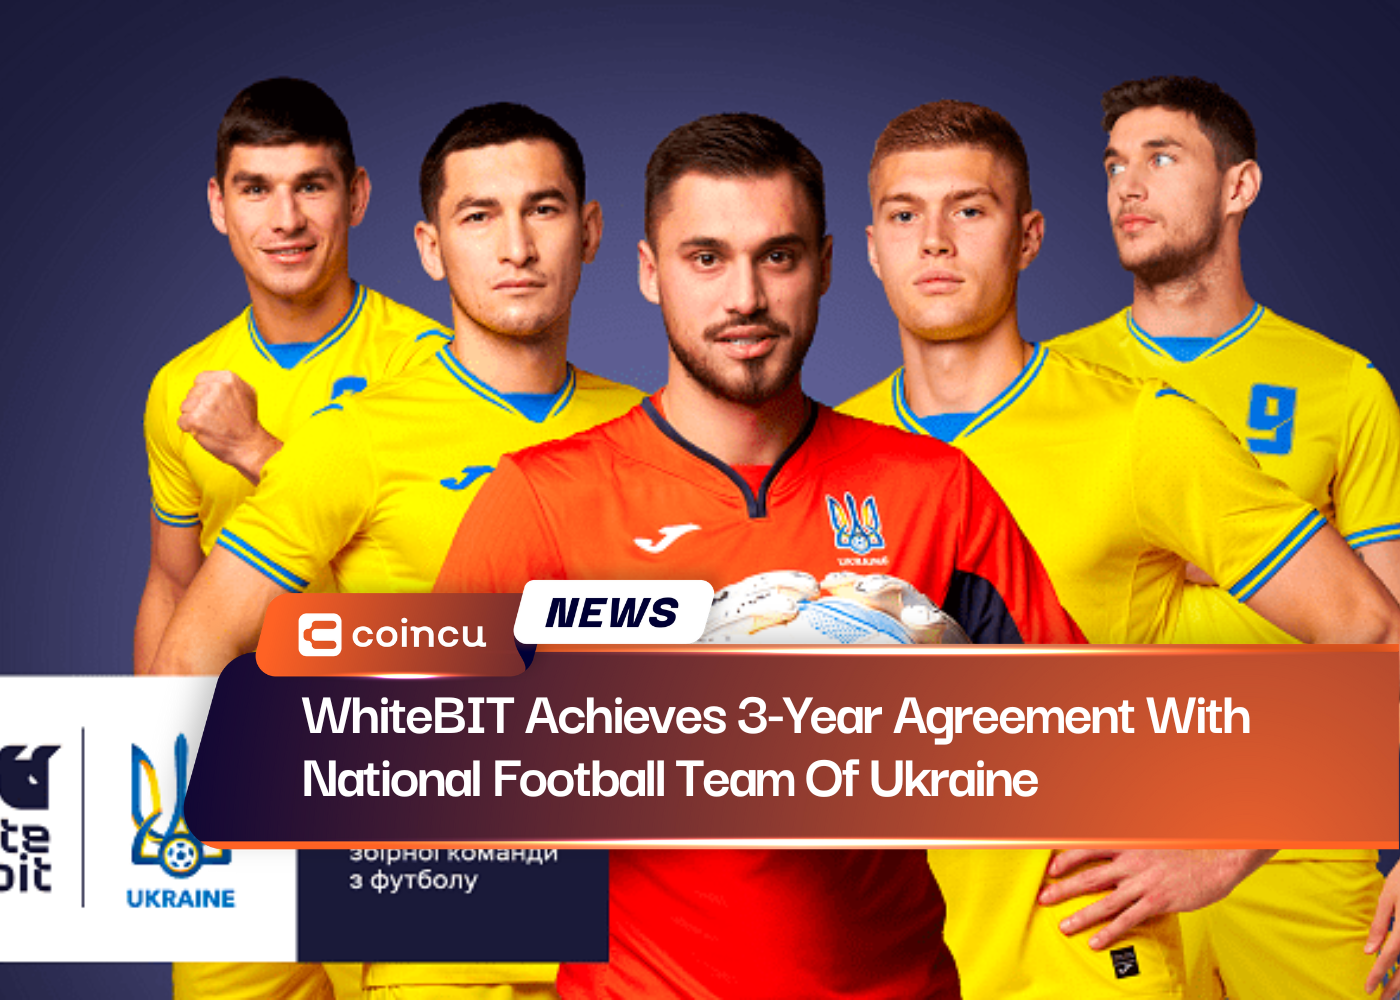 WhiteBIT Achieves 3-Year Agreement With National Football Team Of Ukraine